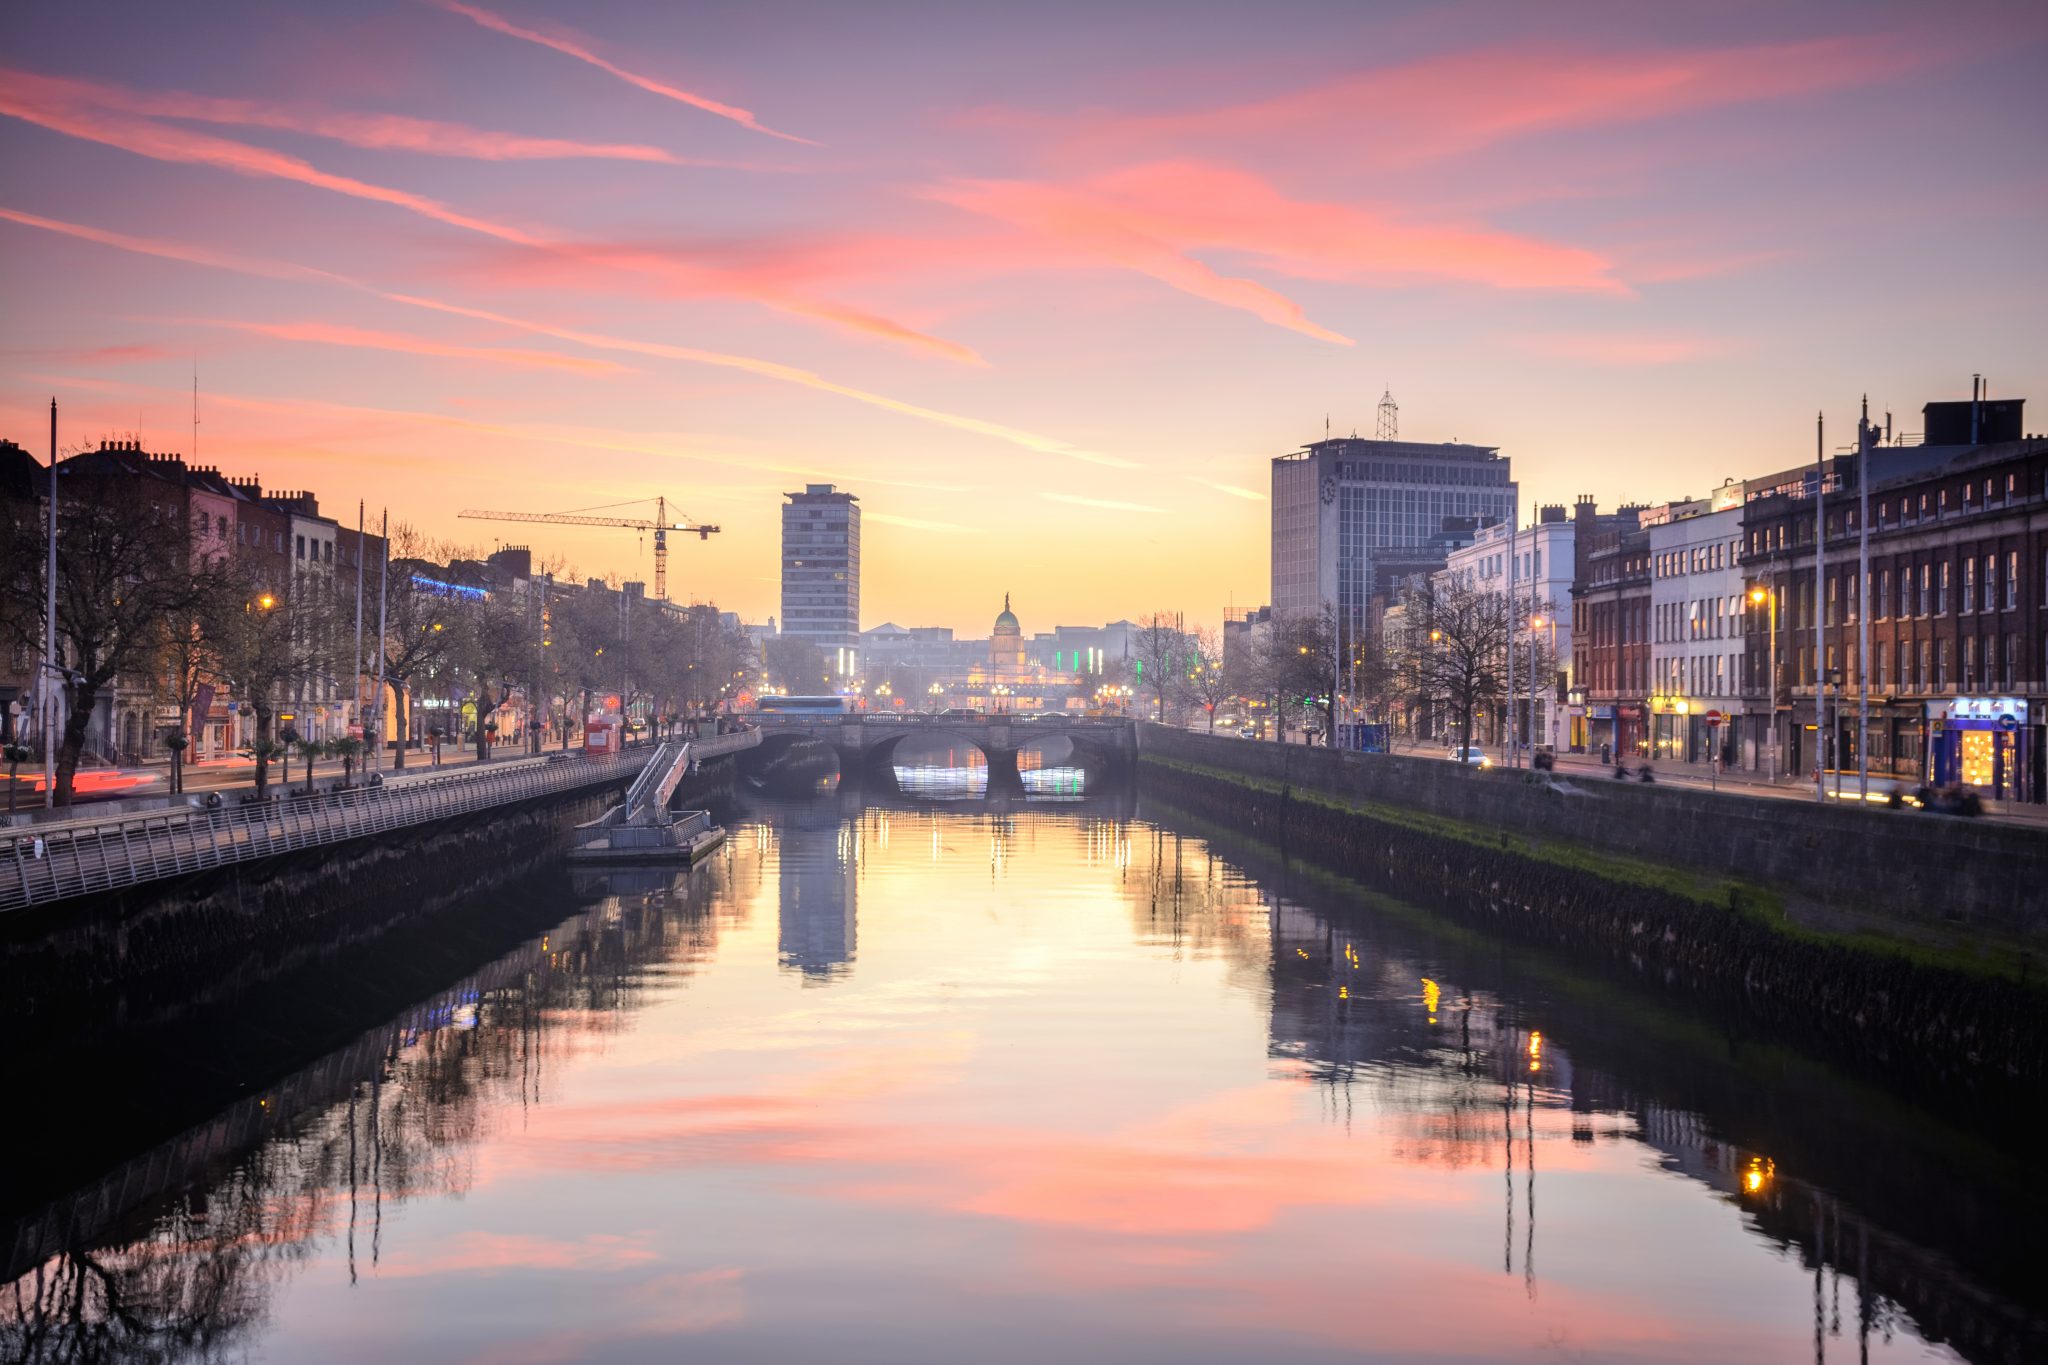 Dublin's Liffey River at sunset